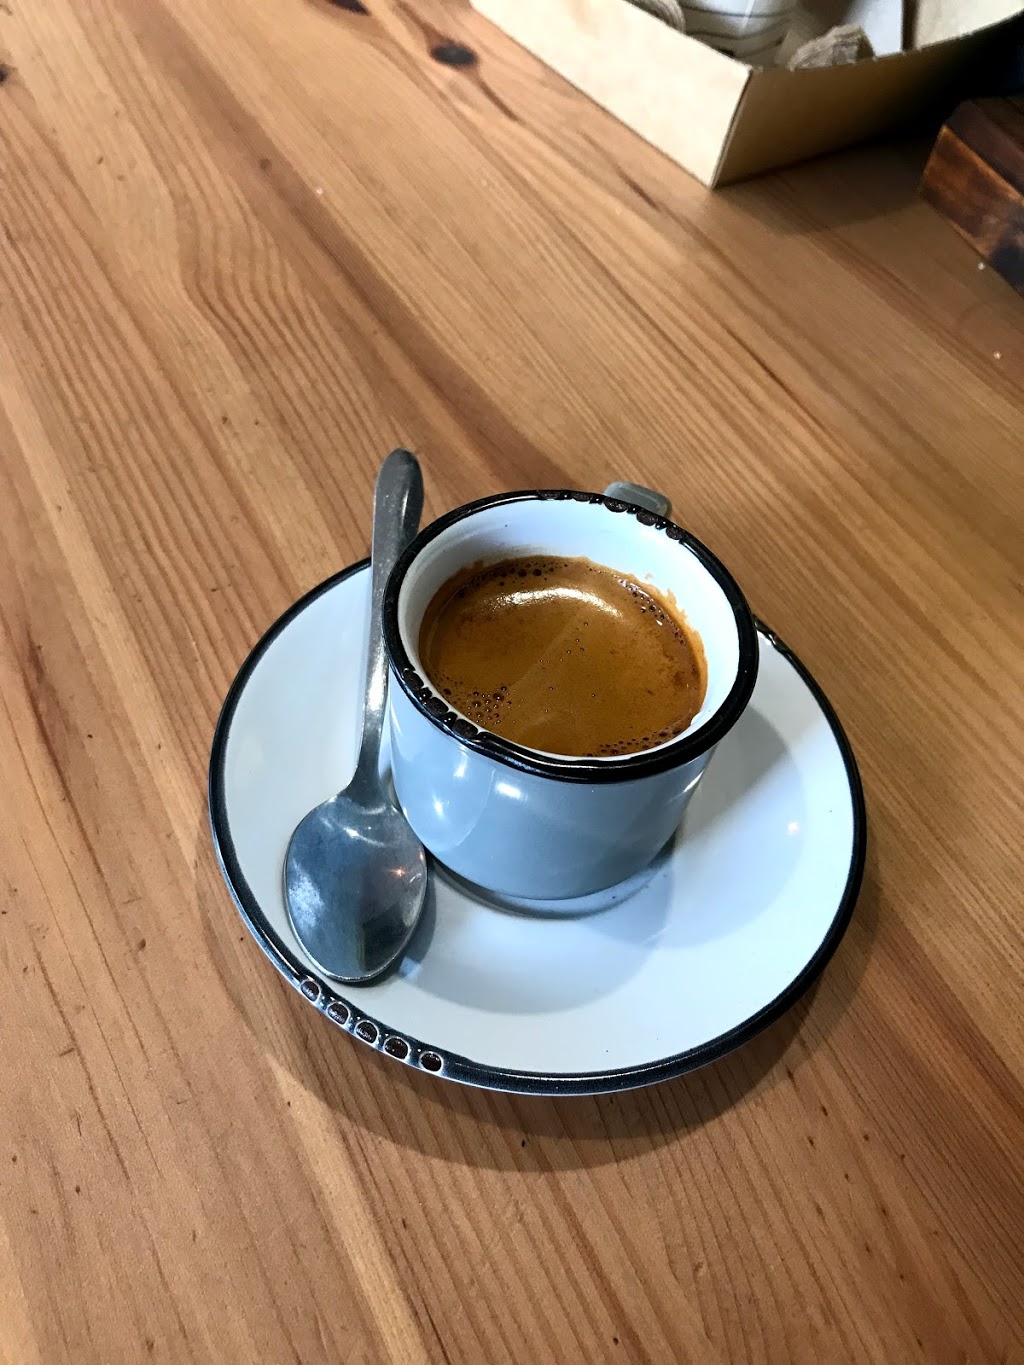 Nomad Espresso | cafe | 856 Old Cleveland Rd, Carina QLD 4152, Australia | 0403310863 OR +61 403 310 863